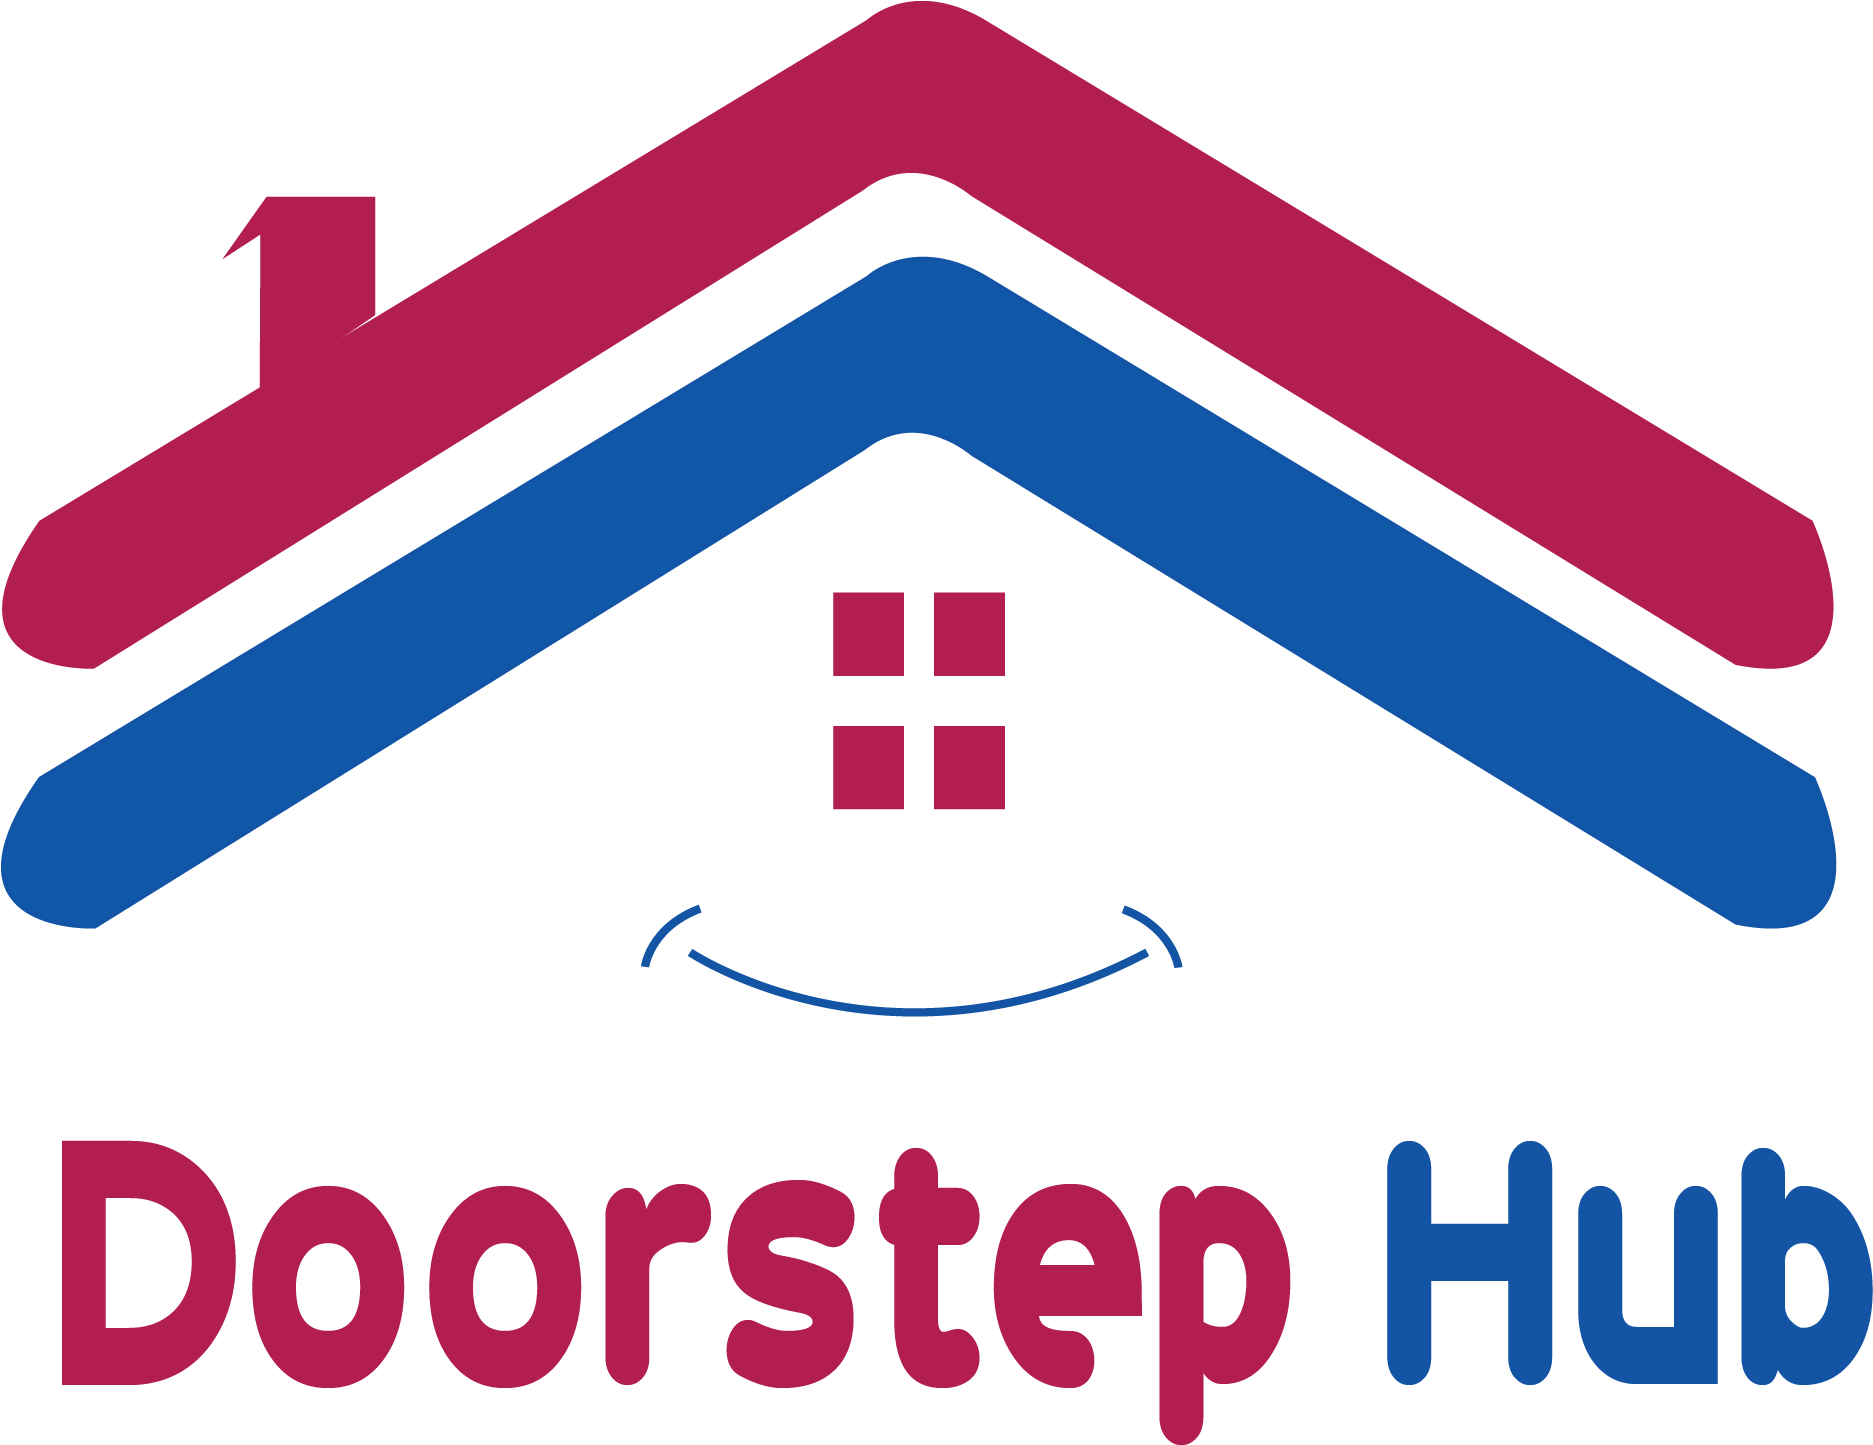 Www - Doorstephub - Com - Logo Household Appliances Repairs (1877x1463)